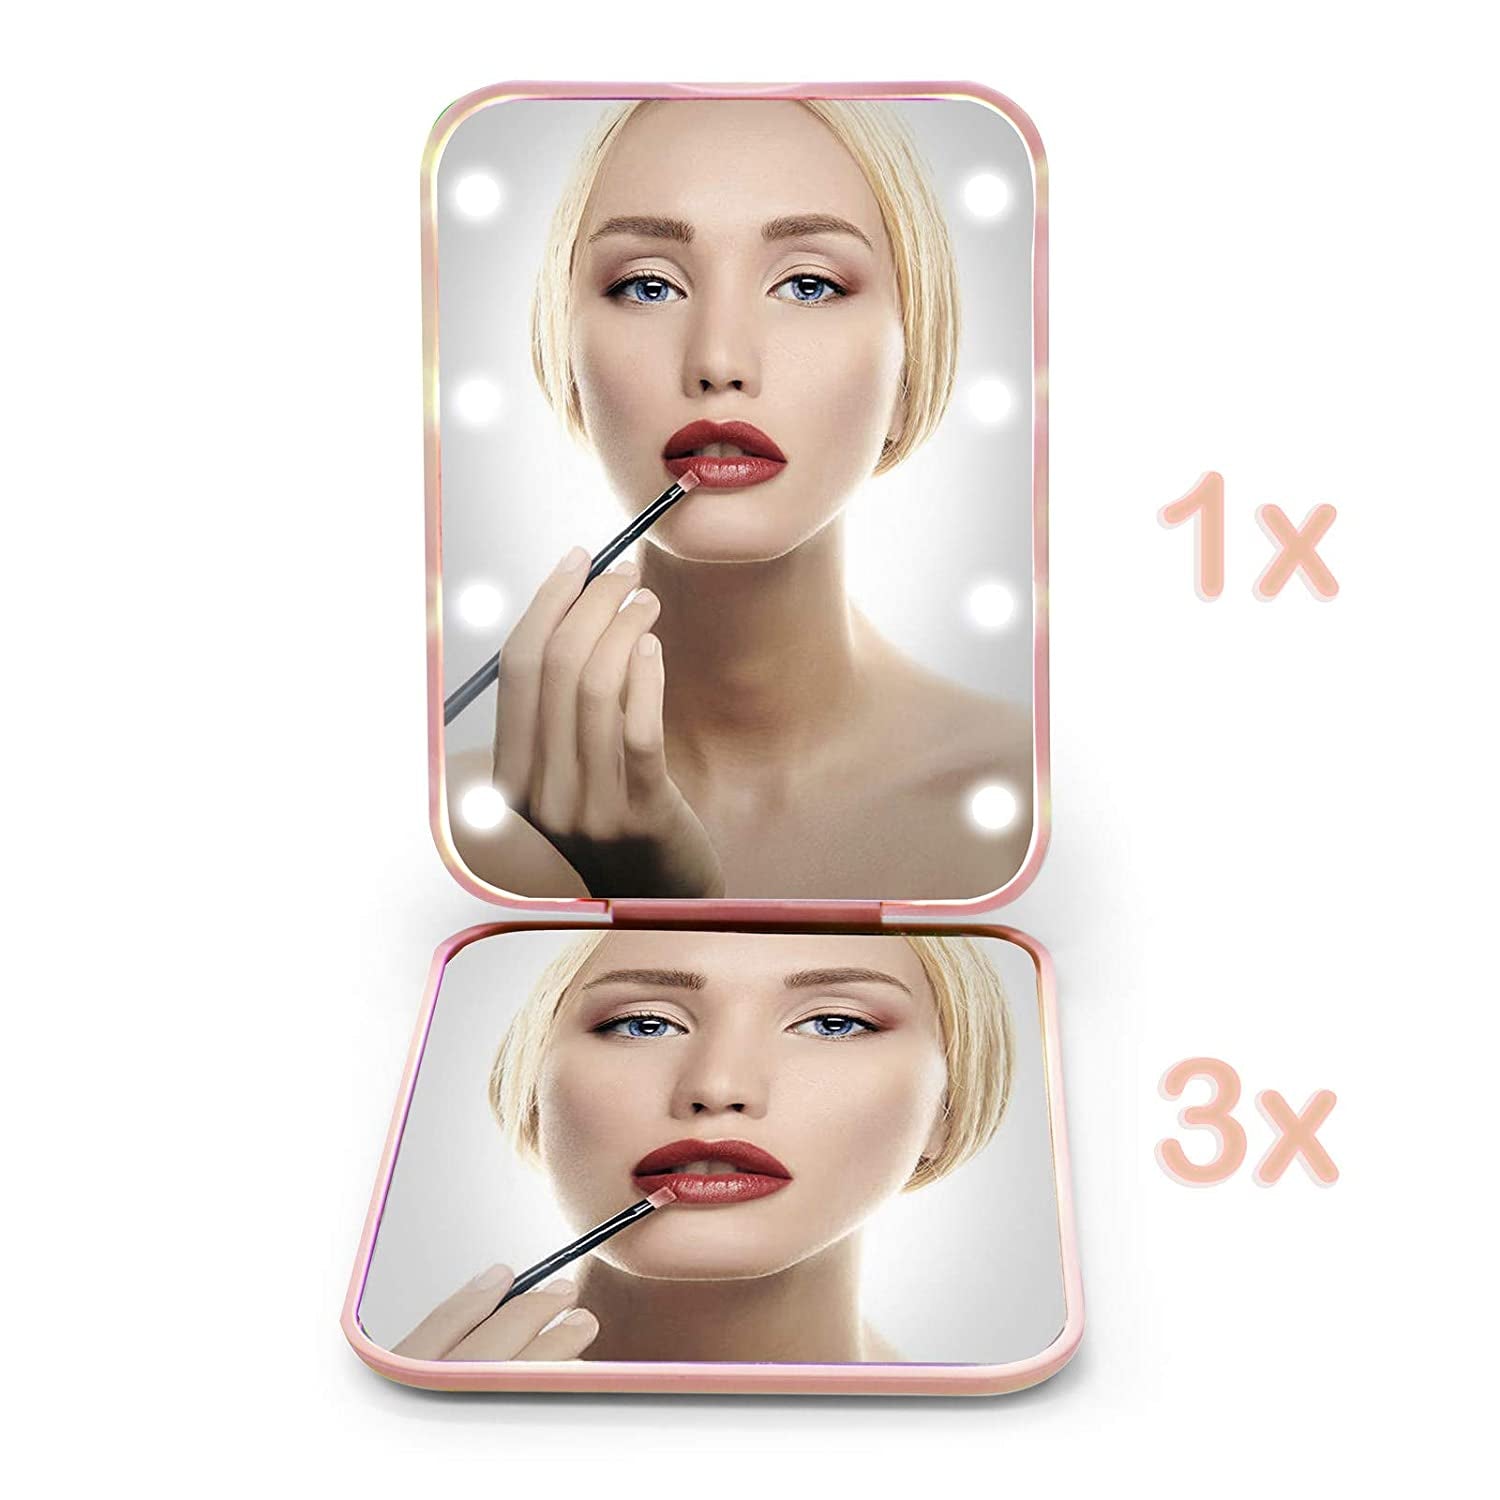 Spring Pocket Mirror, 1X/3X Magnification LED